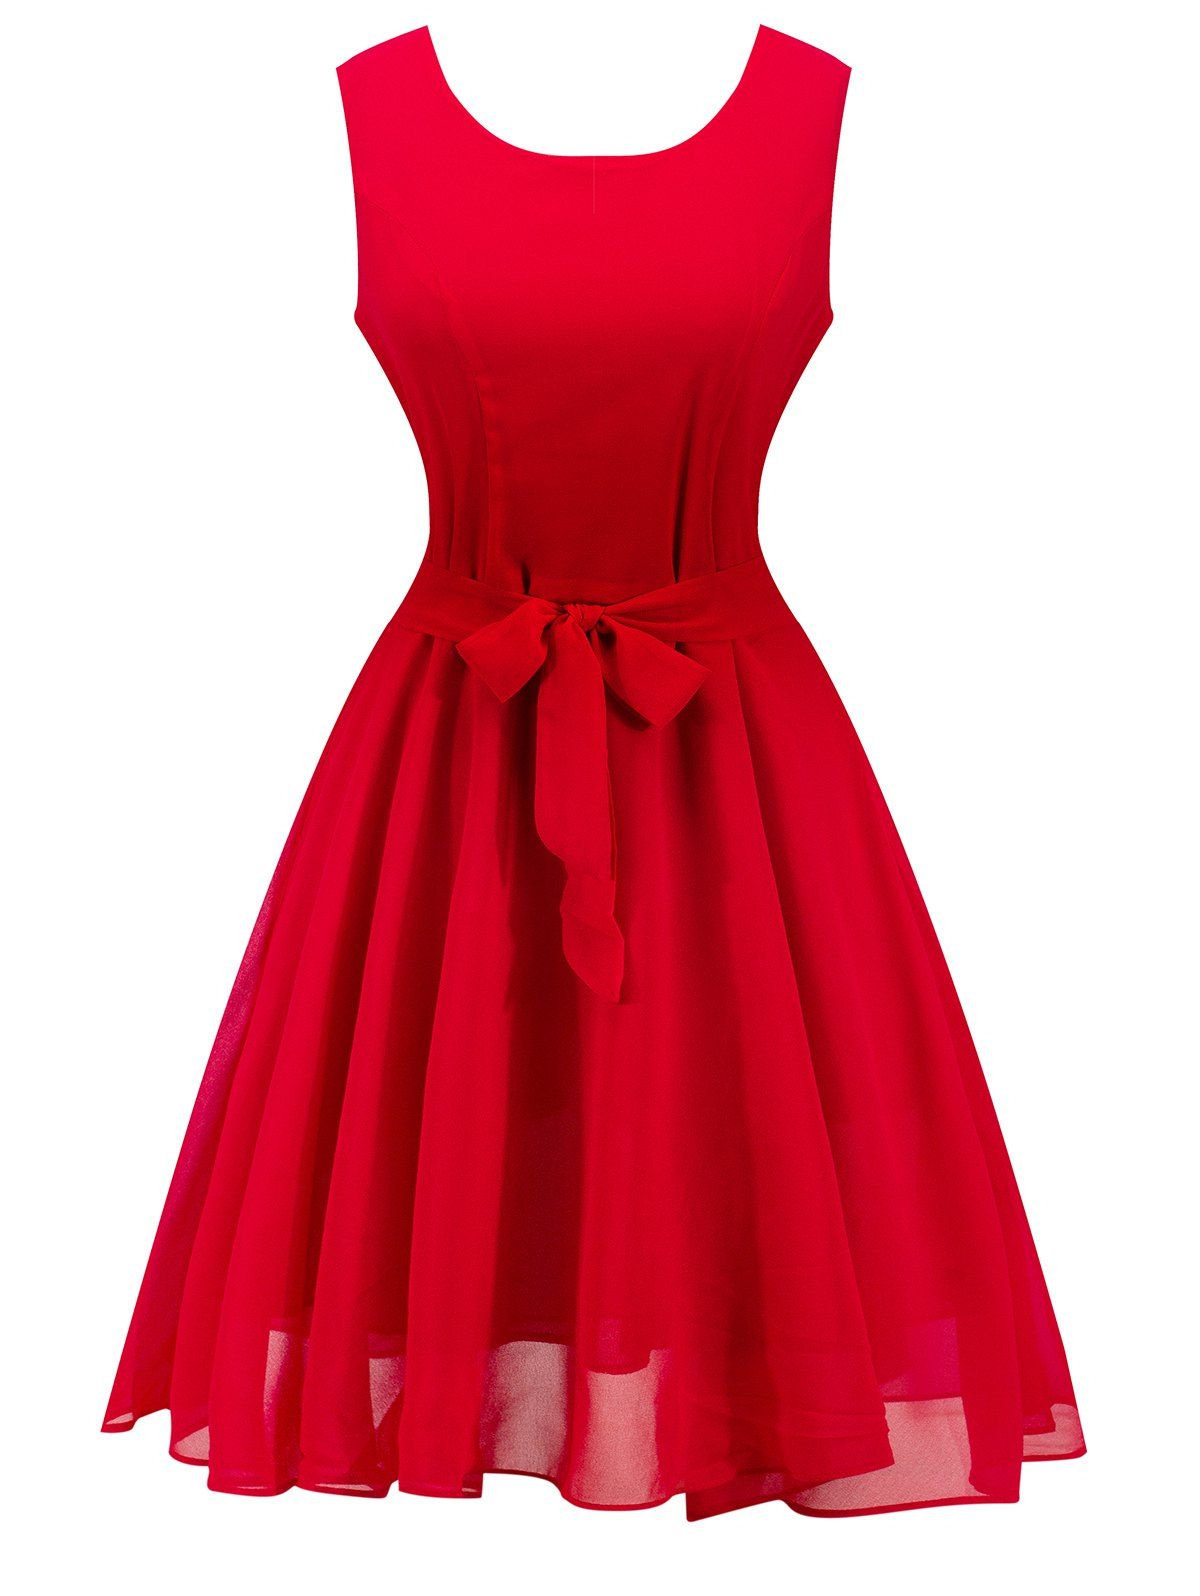 Hills collection websites Spaghetti Strap Backless High Slit Striped Sleeveless Maxi Dresses fashion nova nyc for